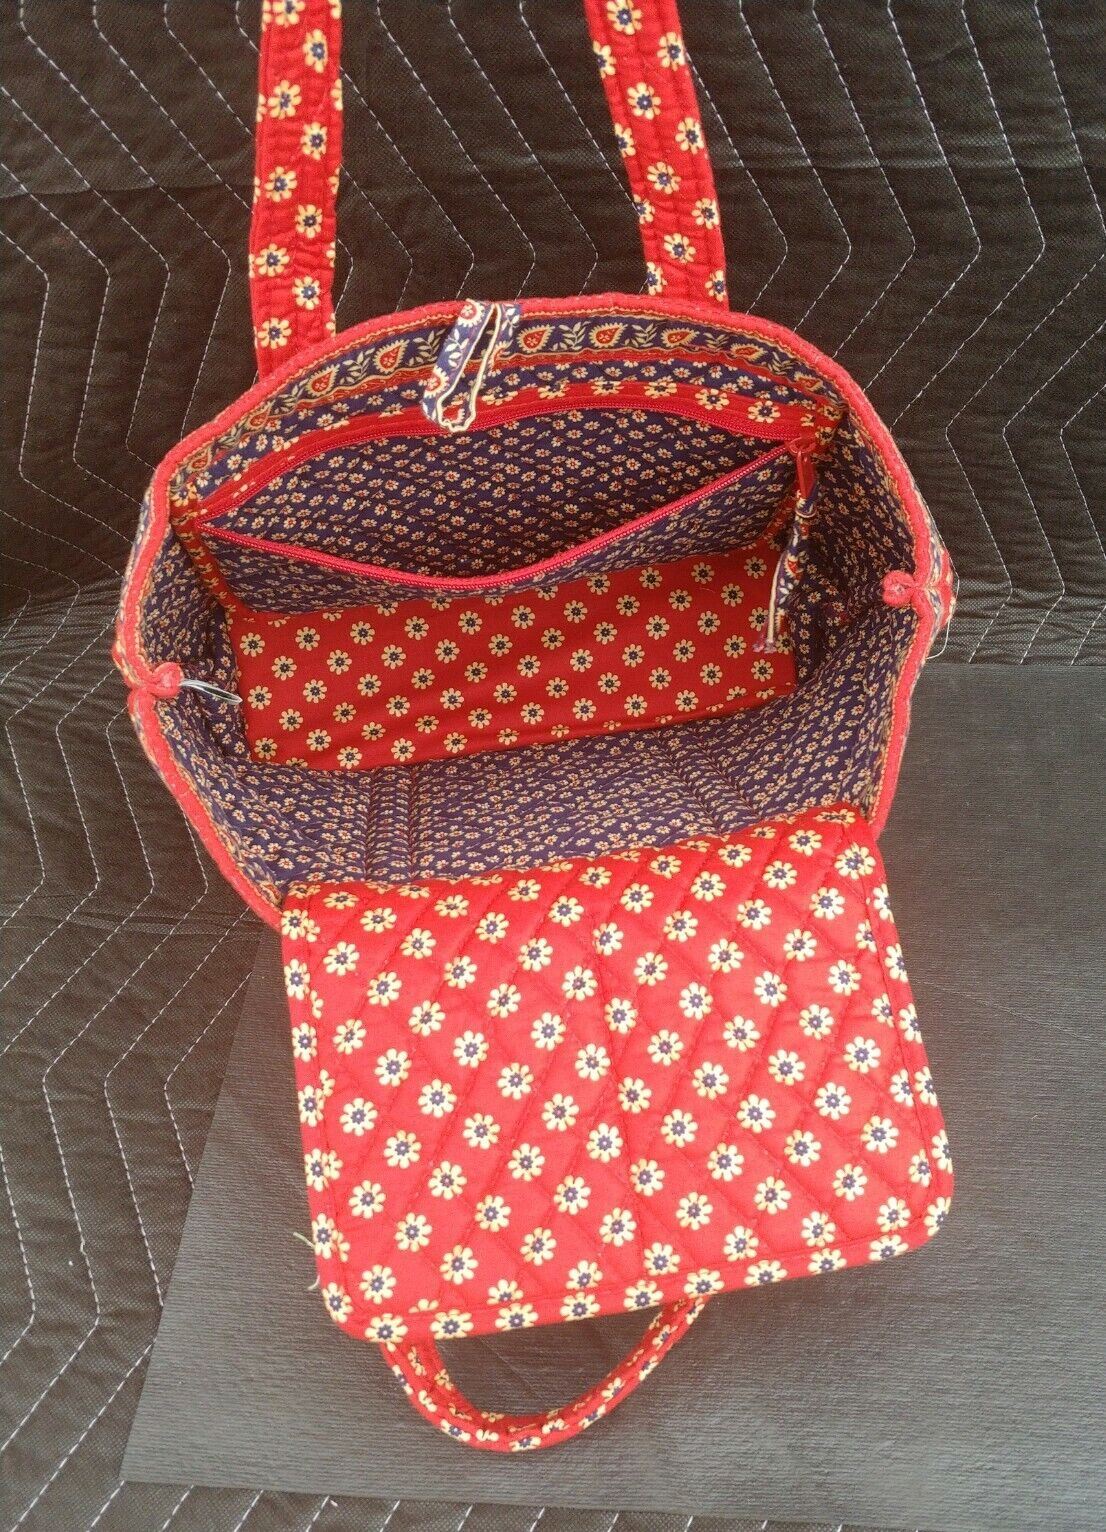 Vera Bradley Miller hand bag purse red w/ floral - wood knob closure